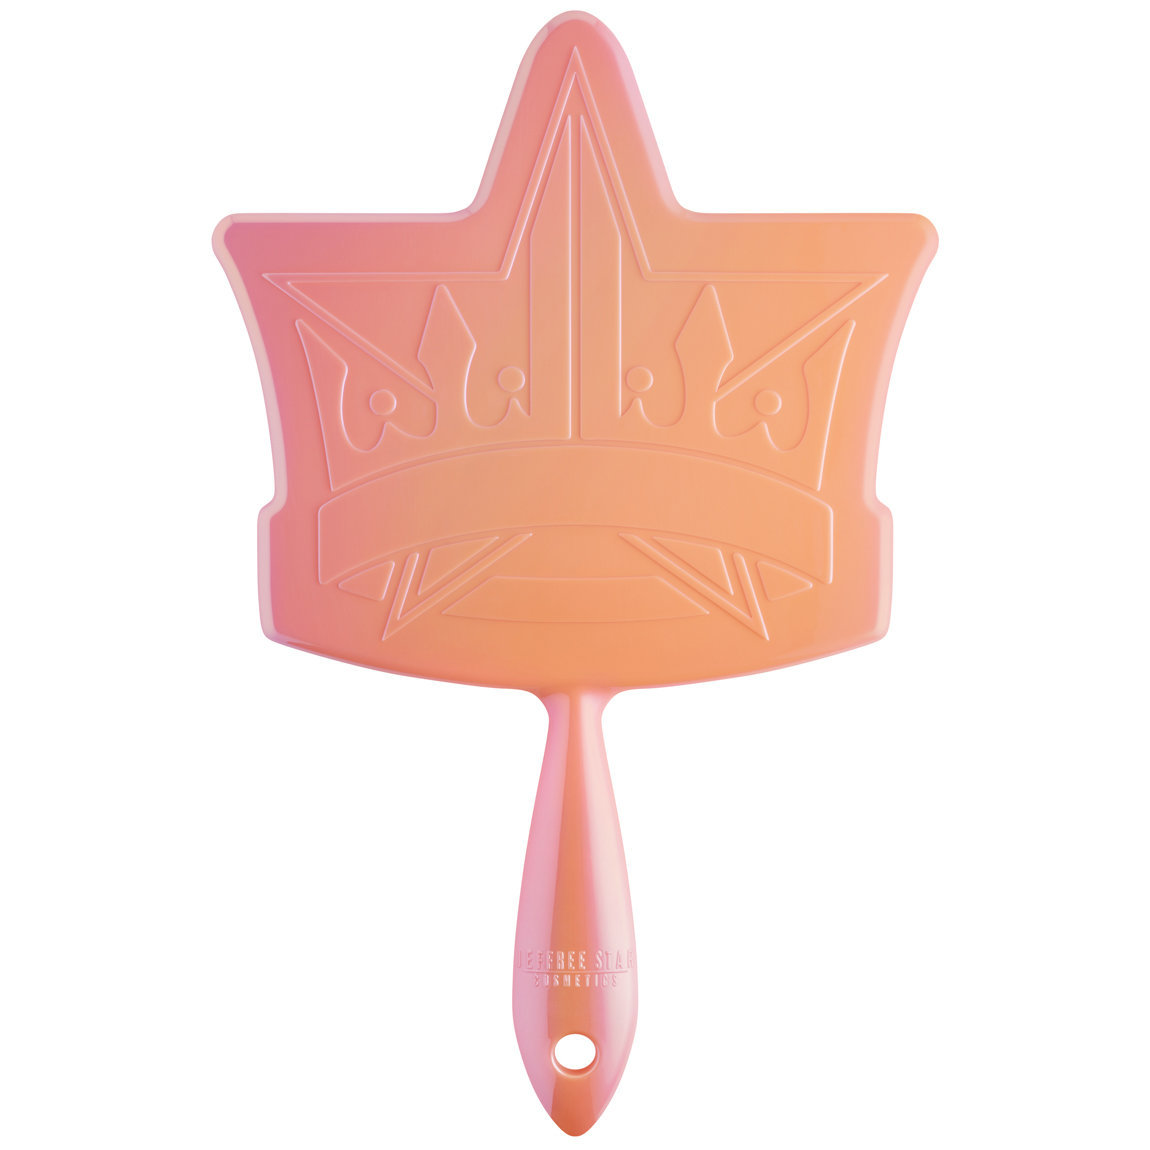 Jeffree Star Cosmetics Crown Mirror Iridescent Orange alternative view 1 - product swatch.